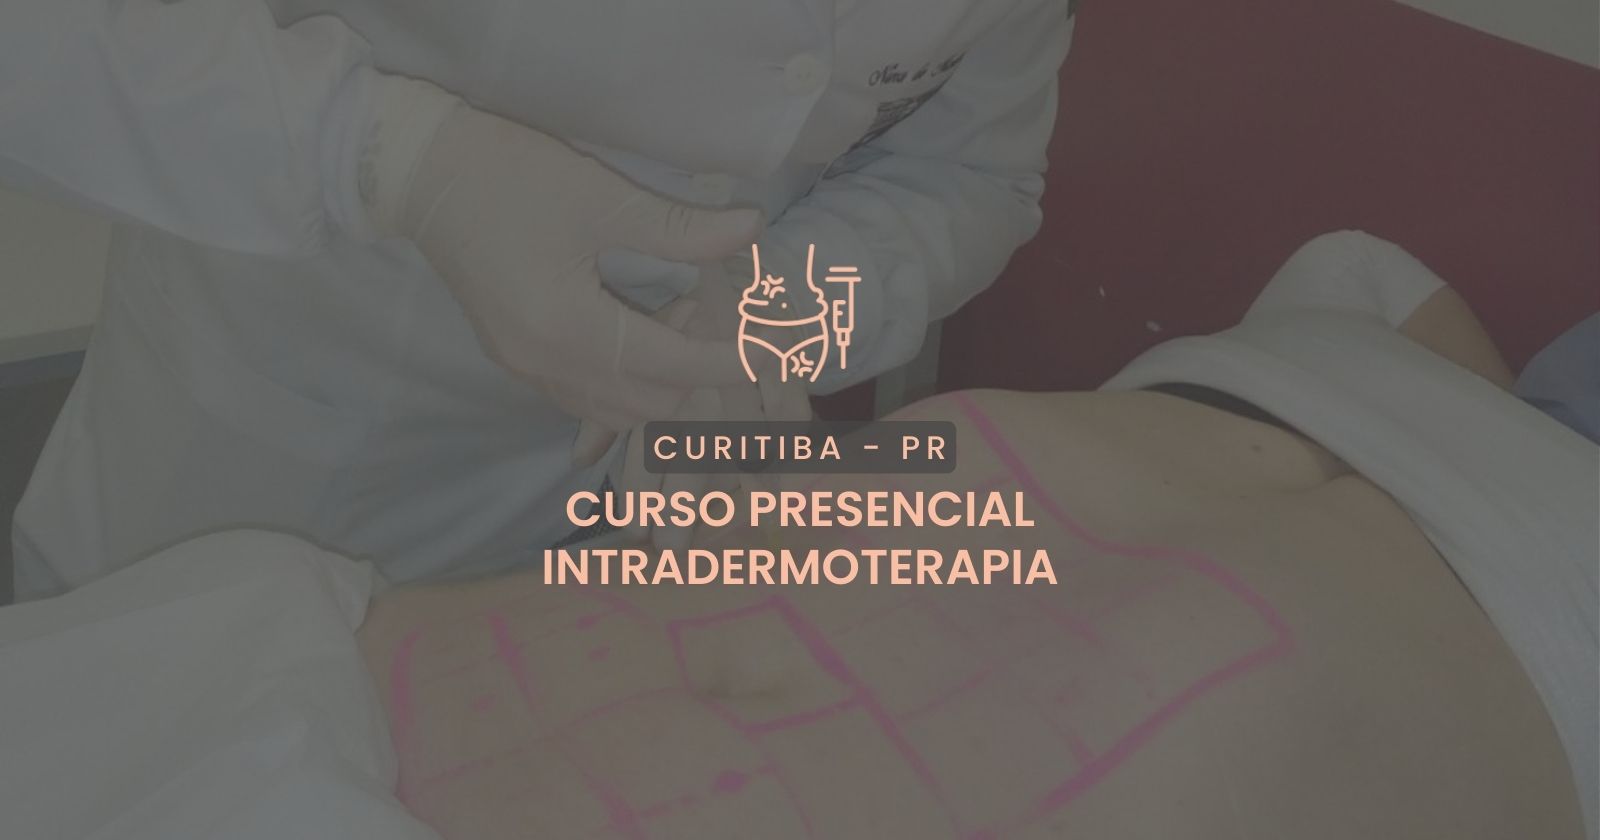 Curso presencial - Intradermoterapia Curitiba